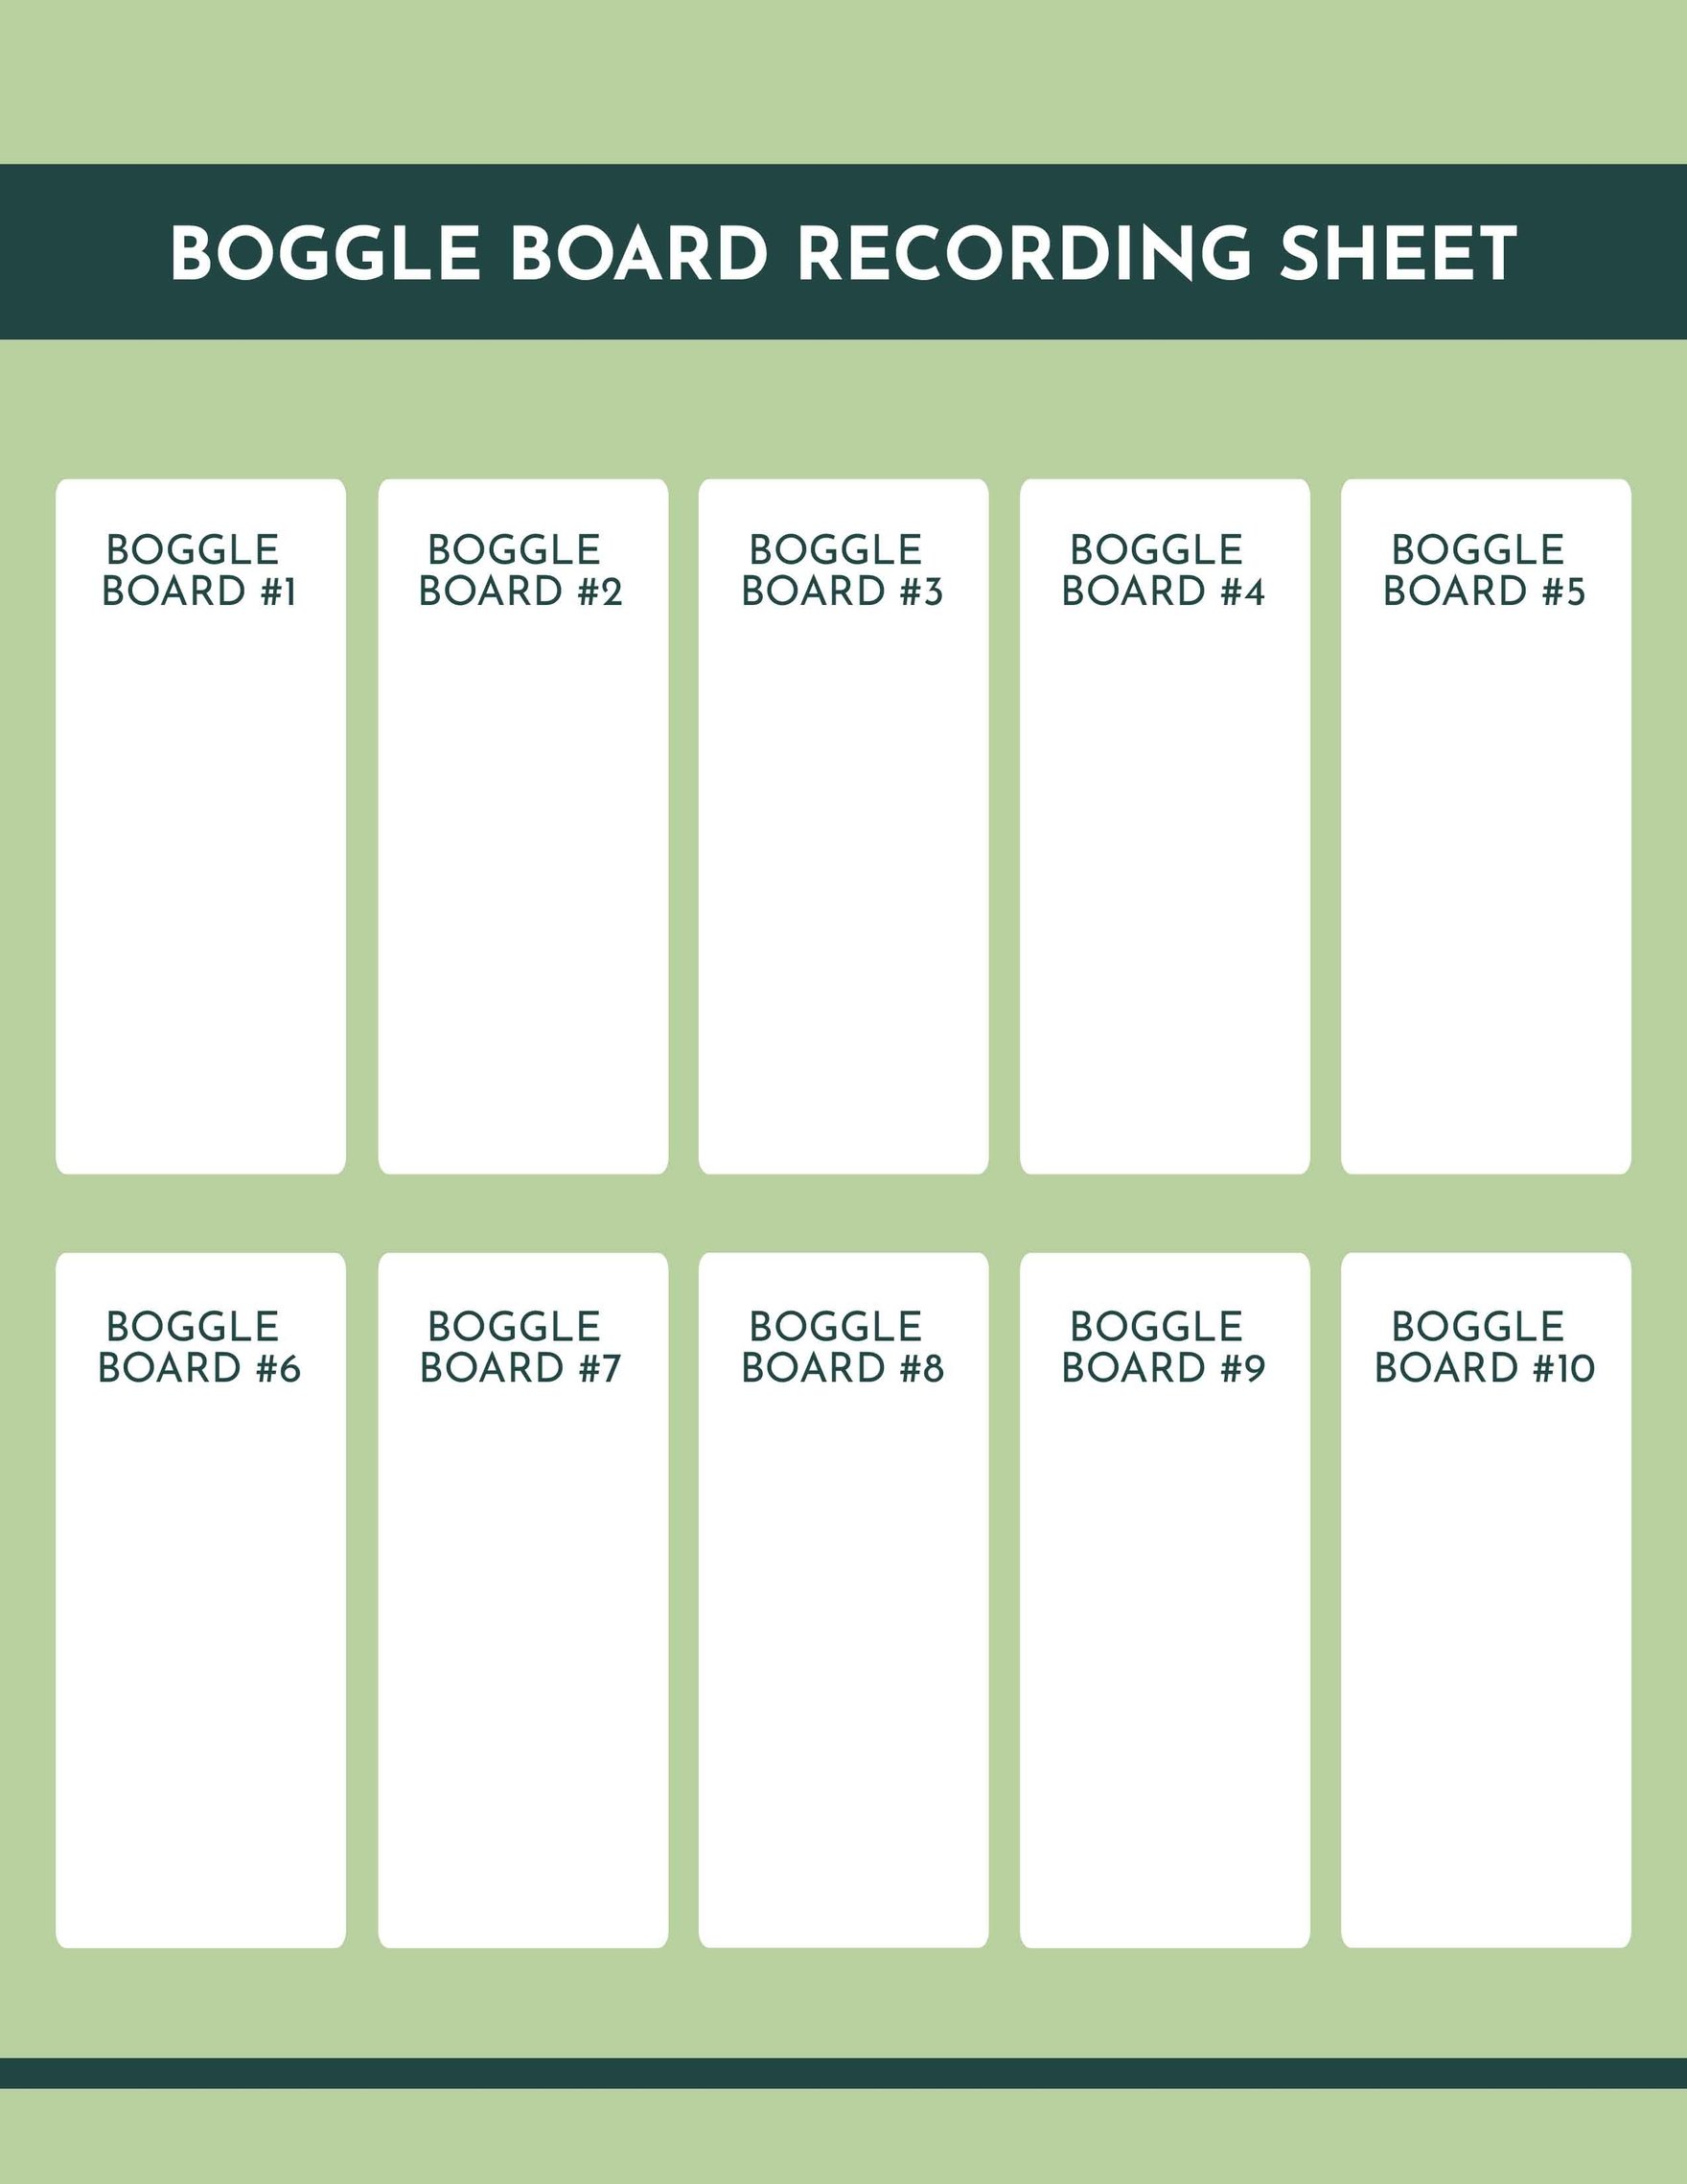 Boggle Board Recording Sheet Template